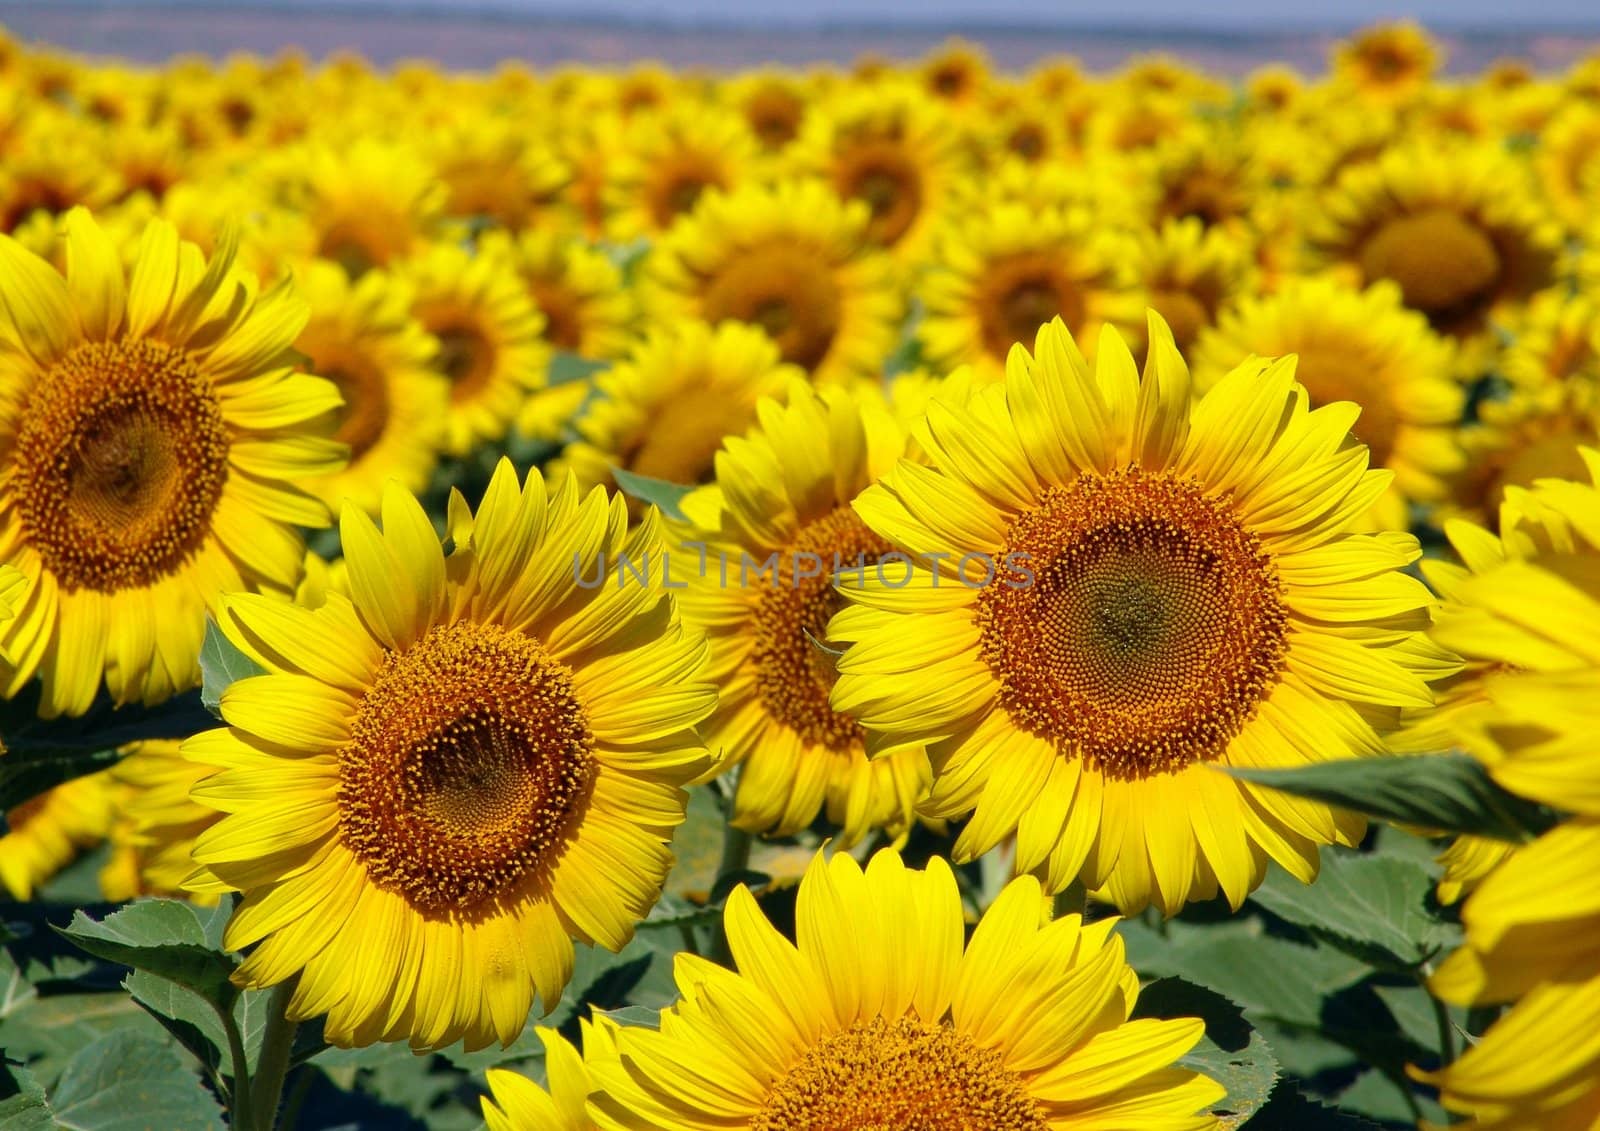 Sunflowers, Russia, near Krasnodar, Russia 2008